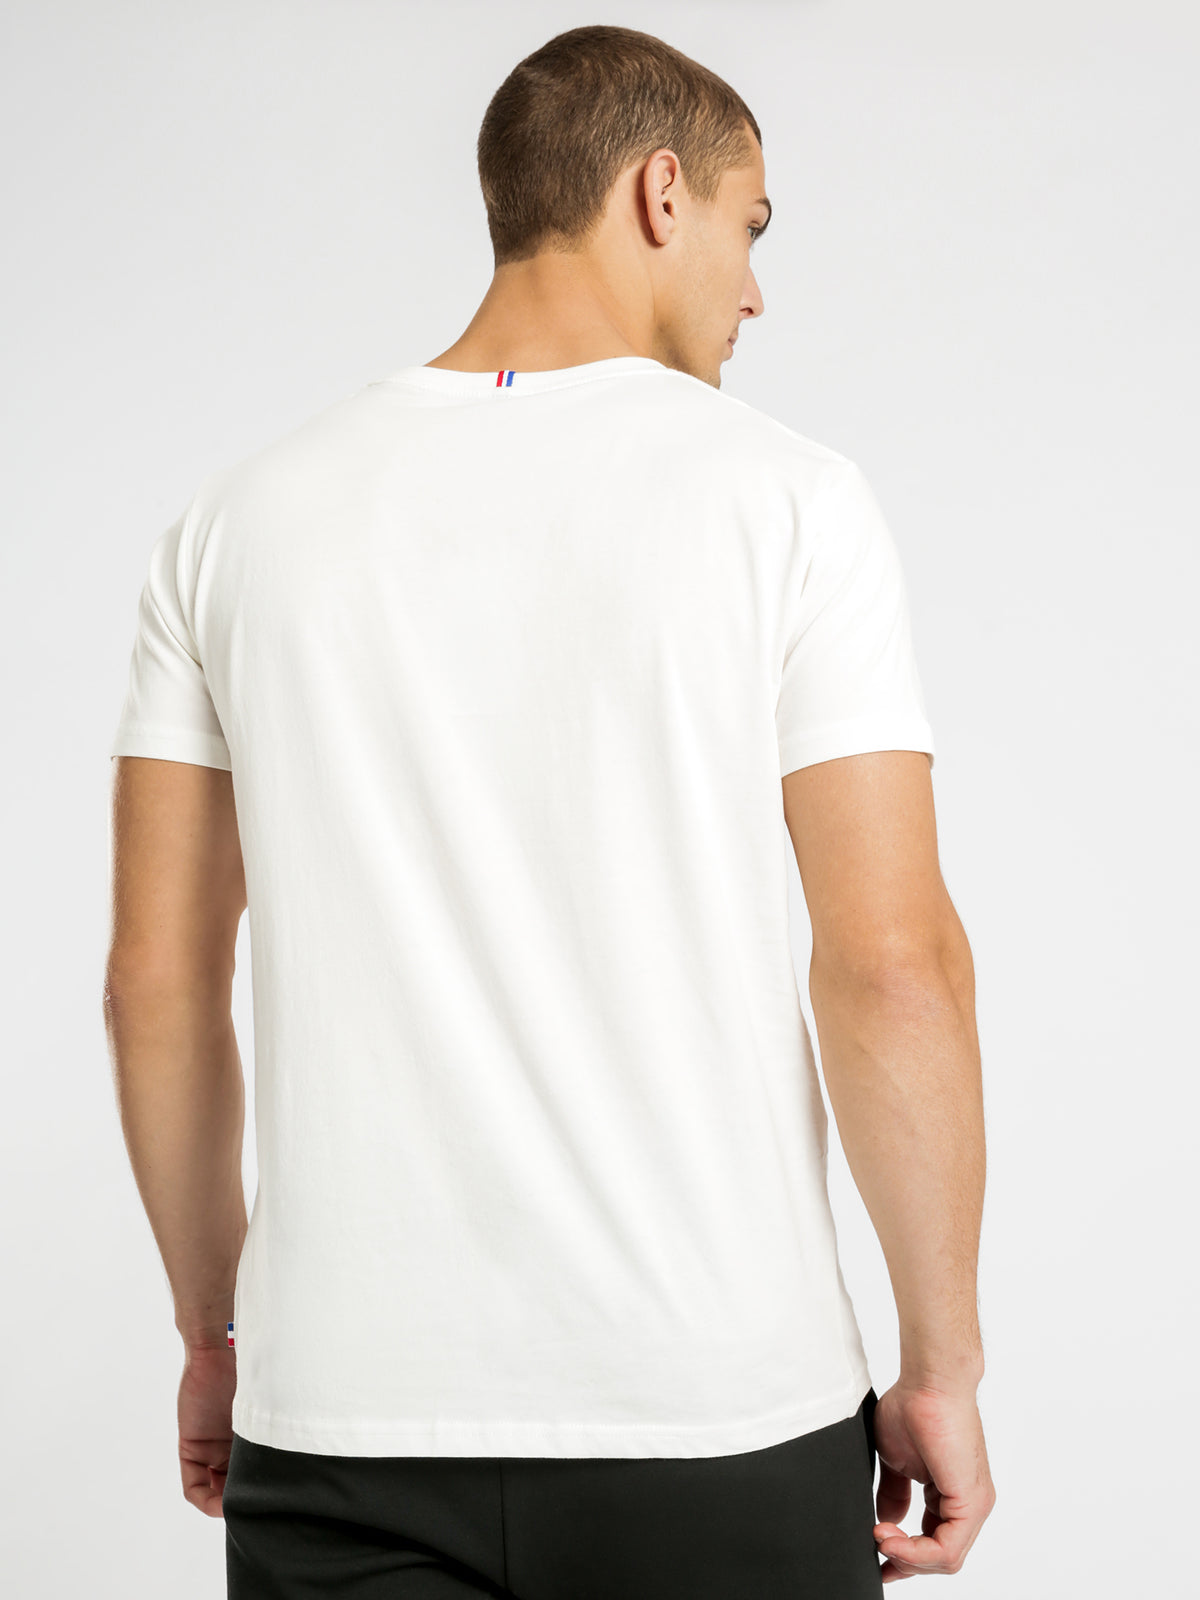 Delano T-Shirt in White